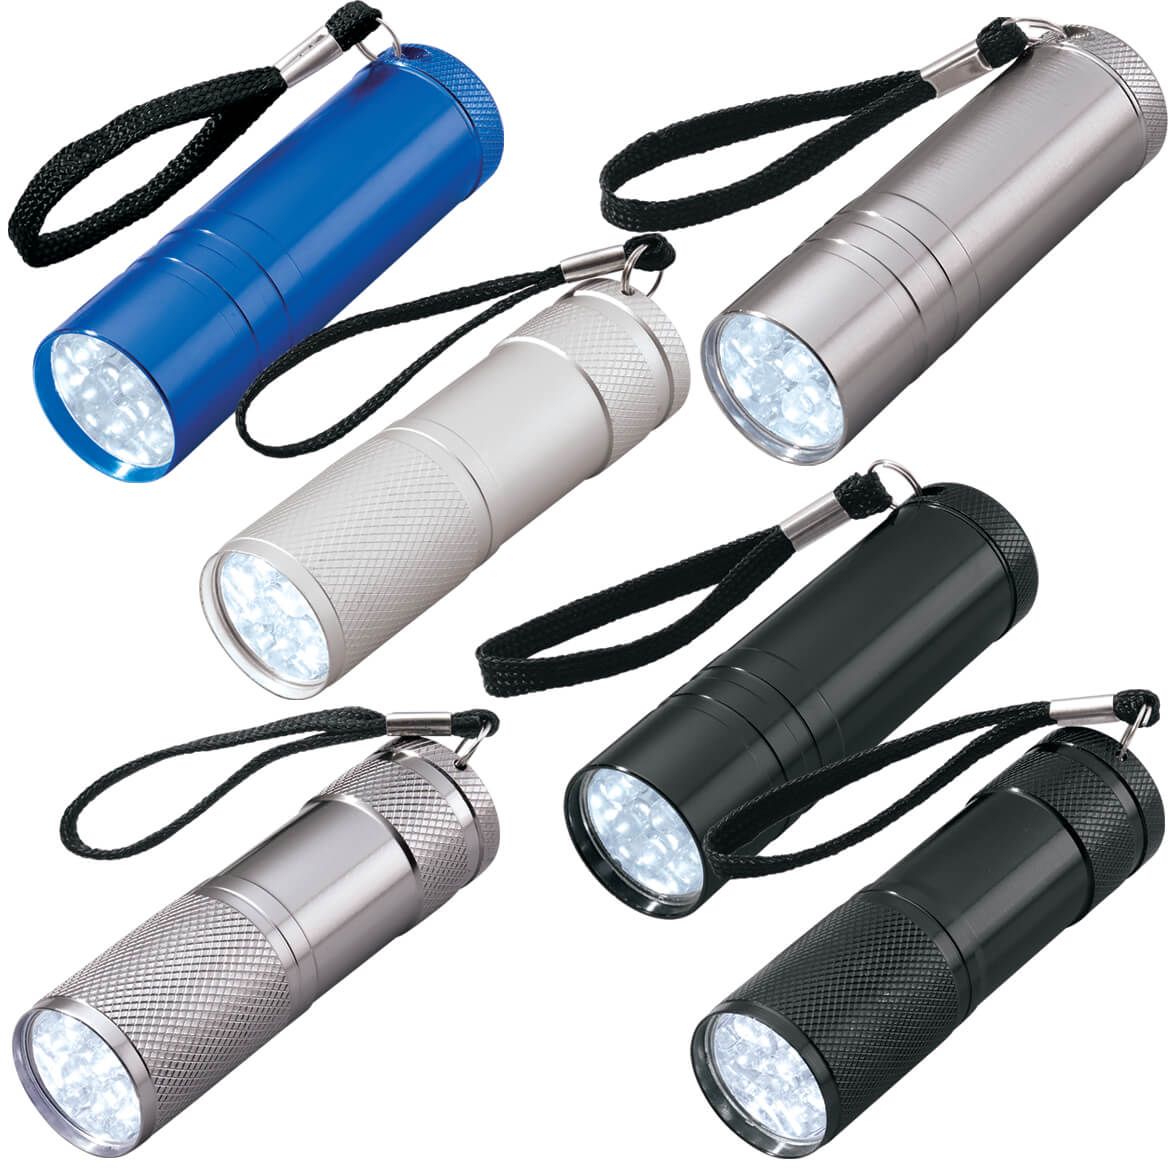 6 Pc LED Flashlight Set + '-' + 338232